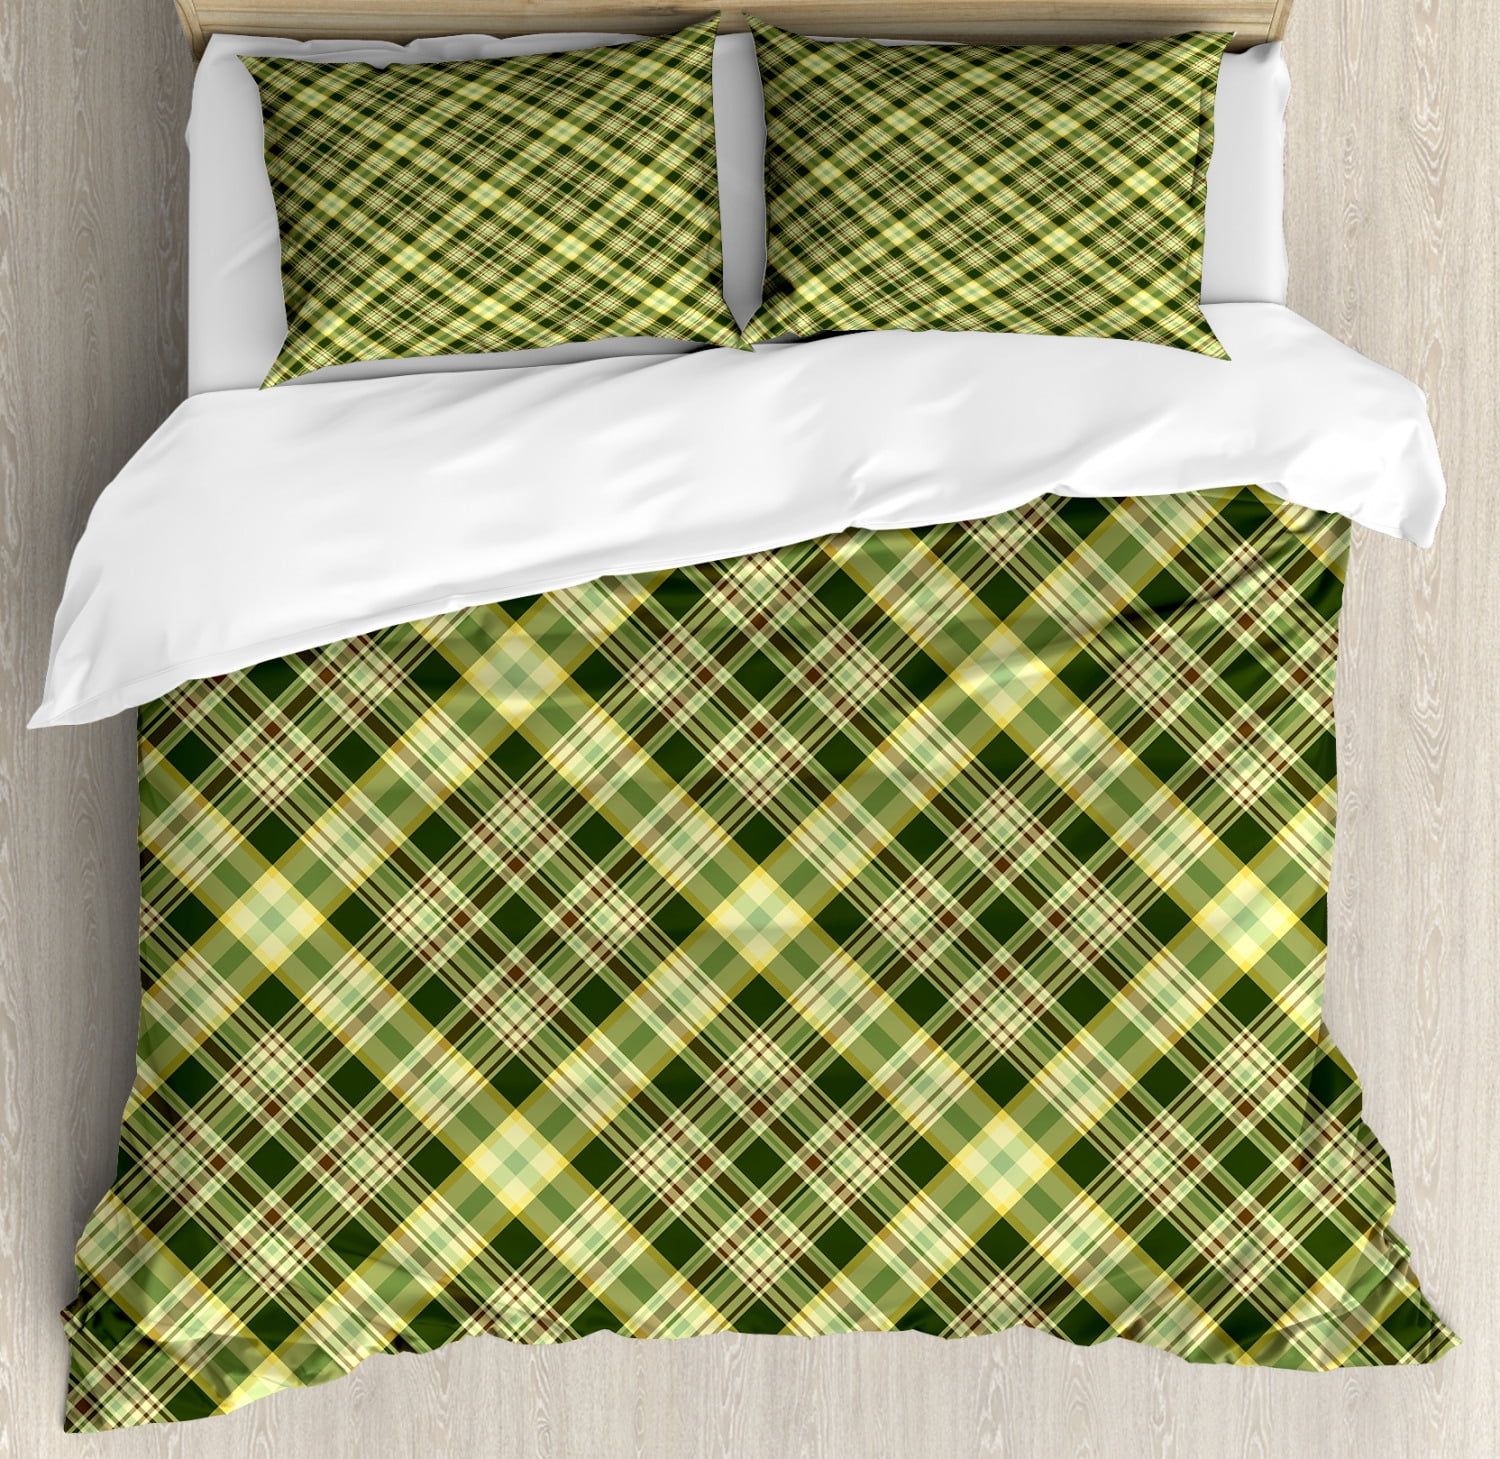 Green And Brown Duvet Cover Set Diagonal Checkered Pattern Irish